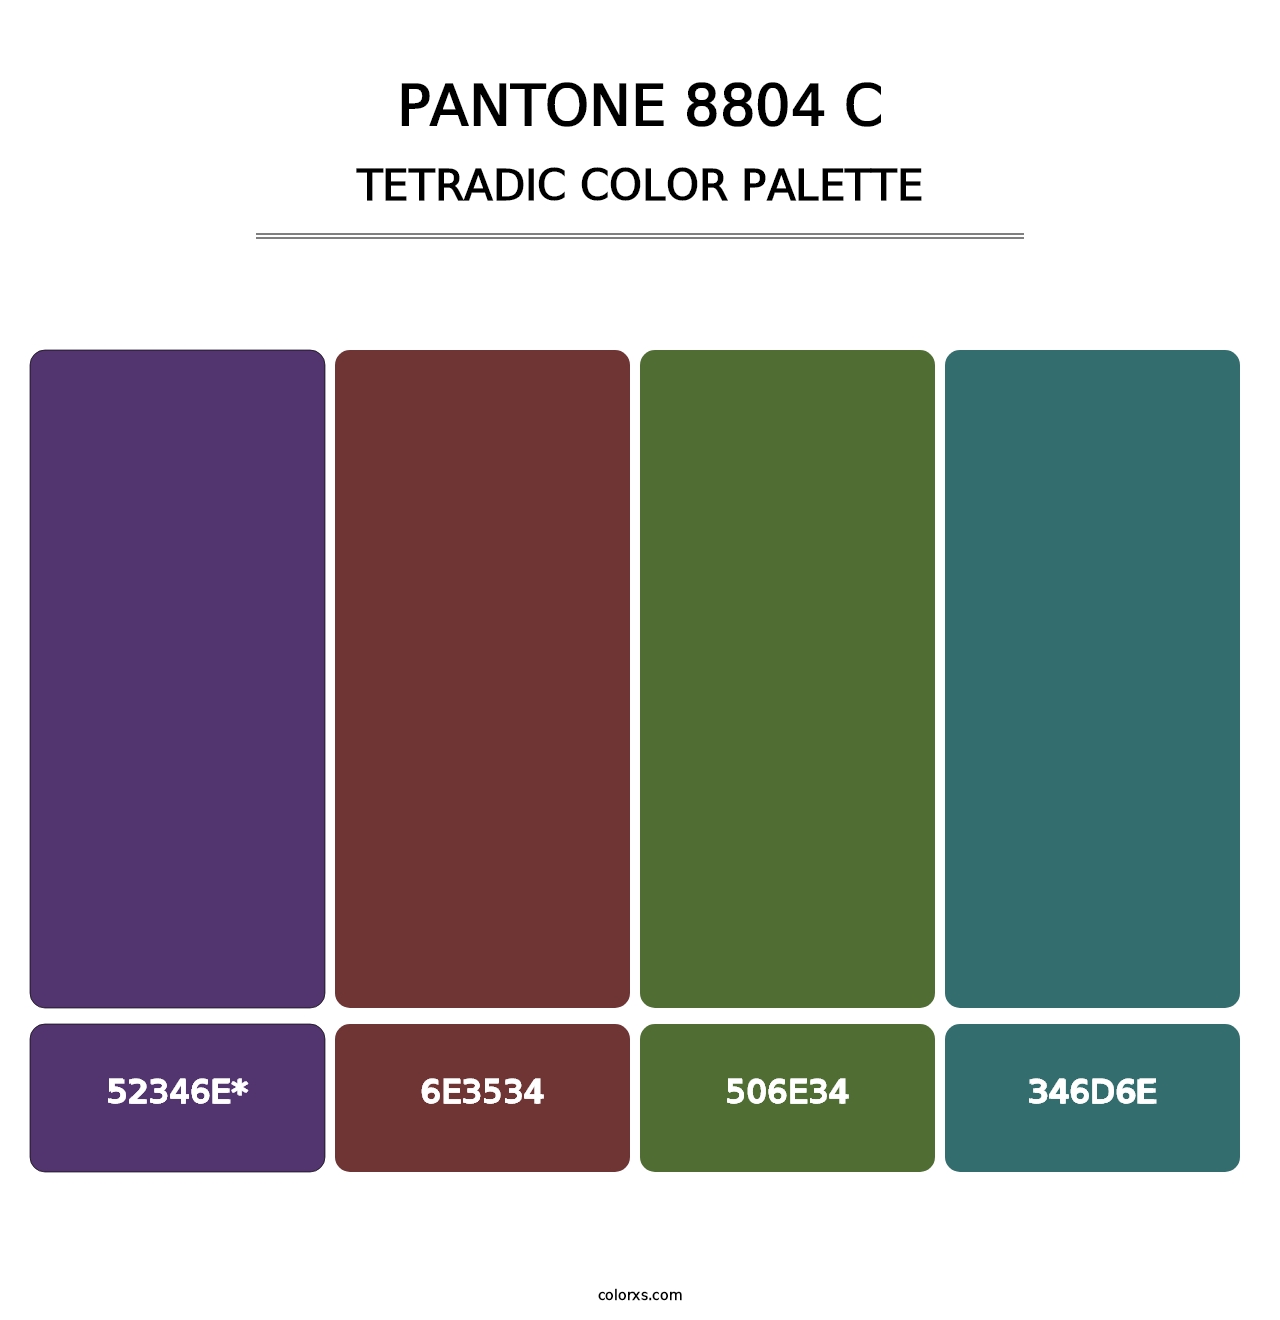 PANTONE 8804 C - Tetradic Color Palette